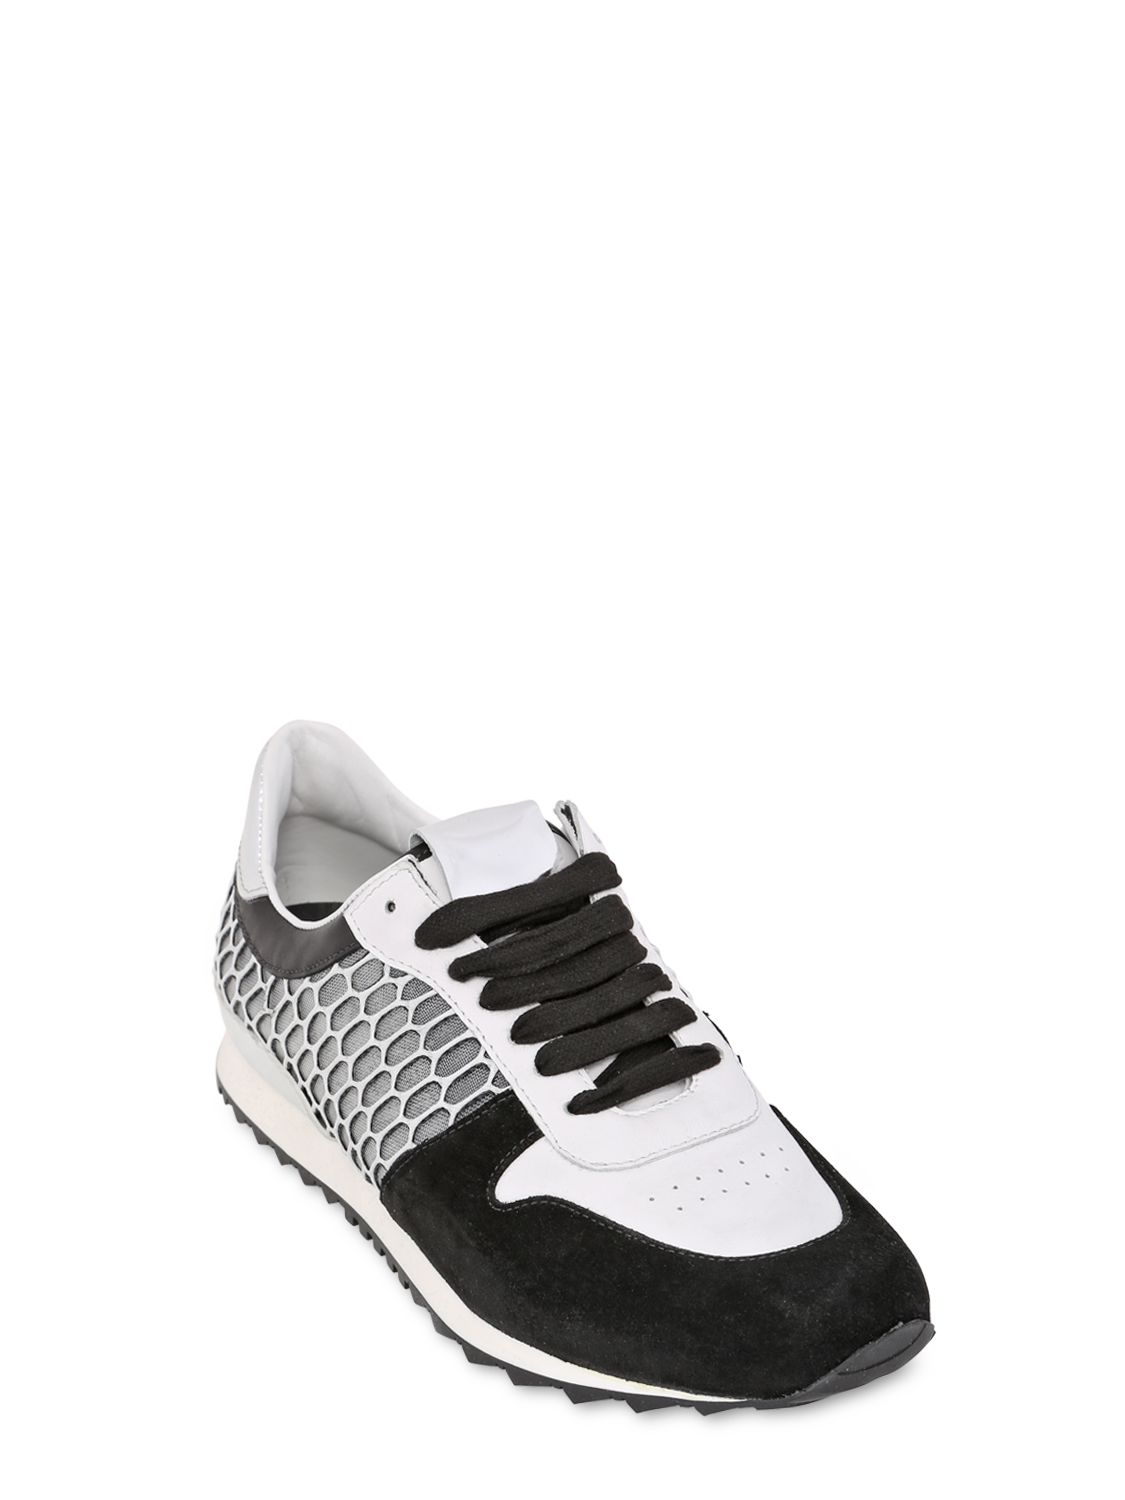 Lyst - Casadei Leather Nylon Running Sneakers in Black for Men